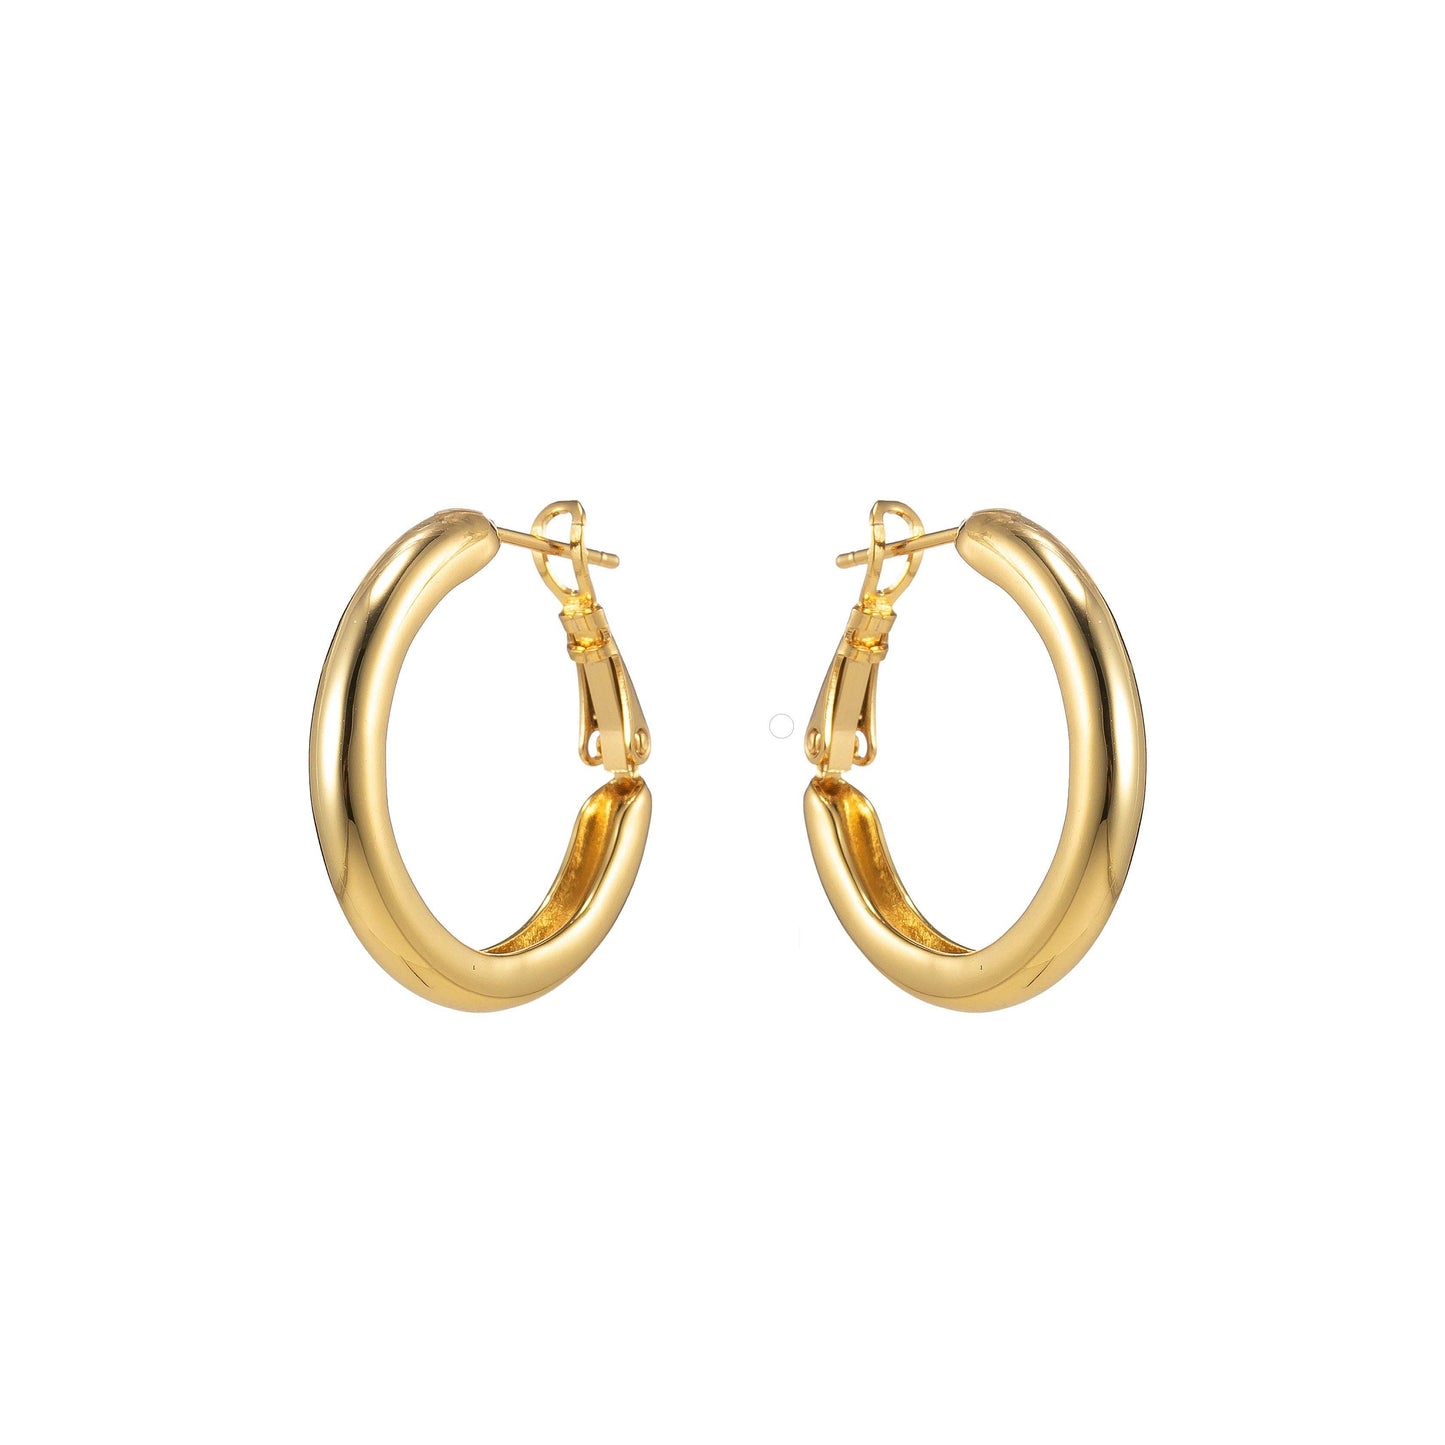 Chunky Gold Hoop Earrings Hypoallergenic 24k Gold Filled Simple Minimalistic Hoops  P186